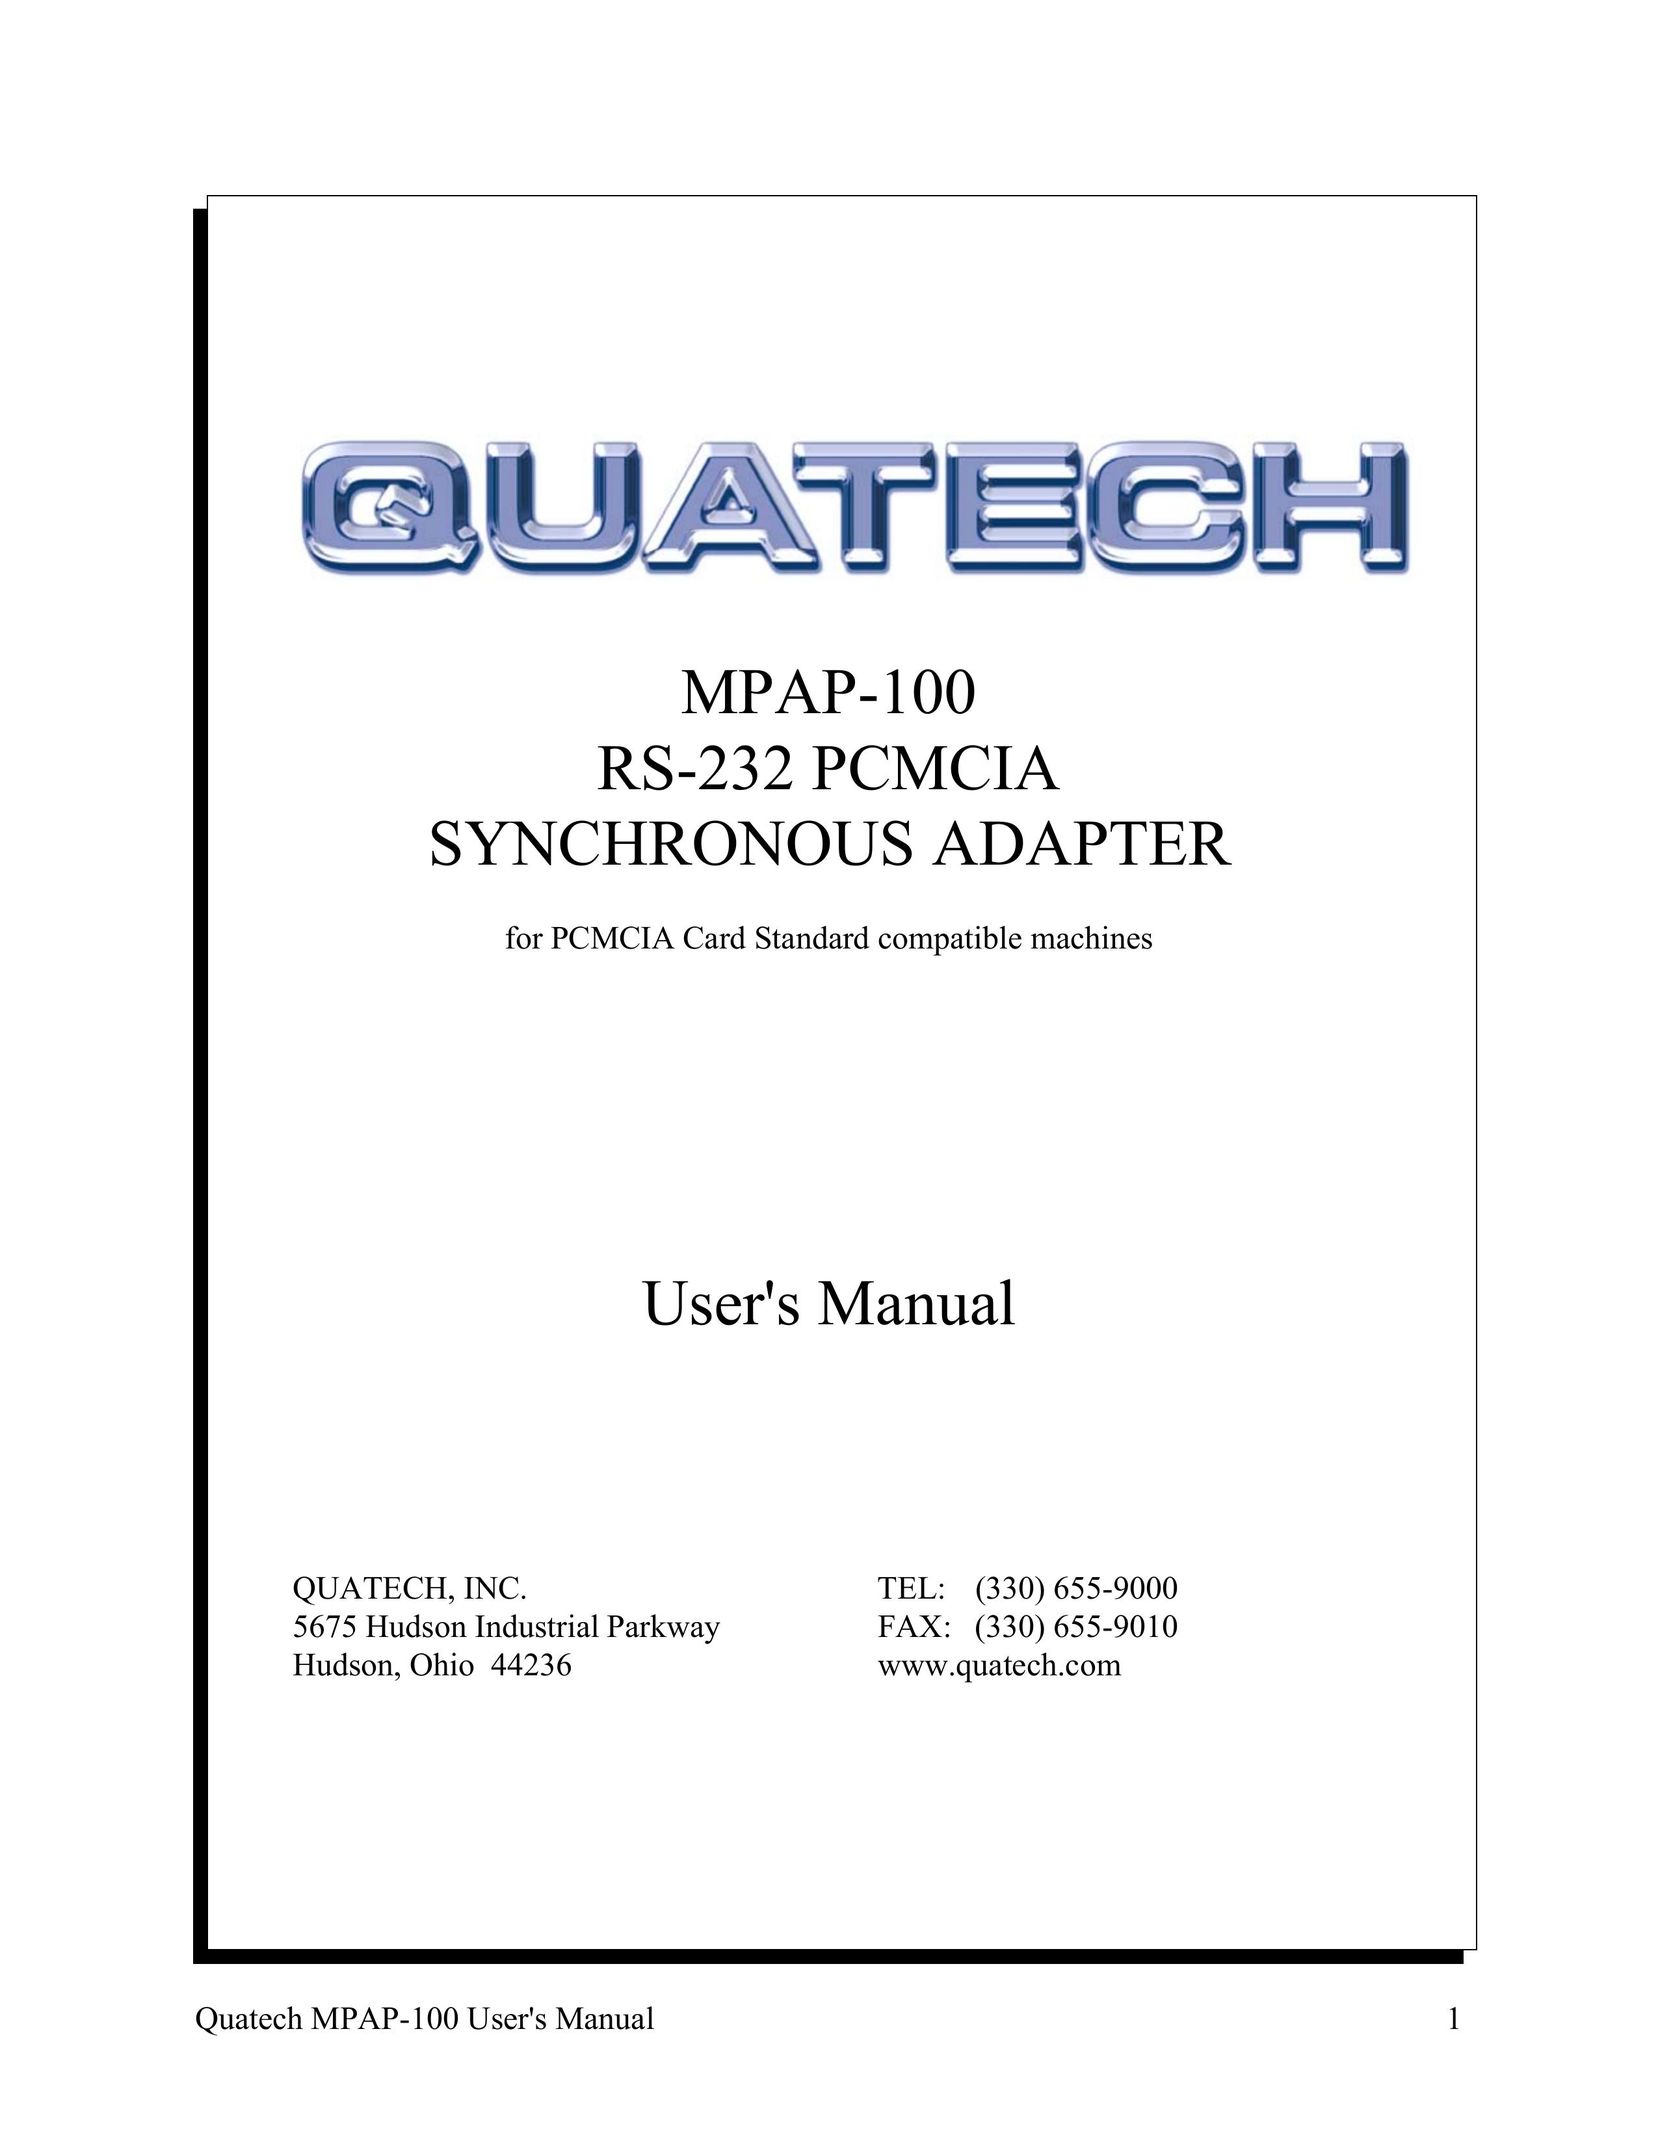 Quatech MPAP-100 Network Card User Manual